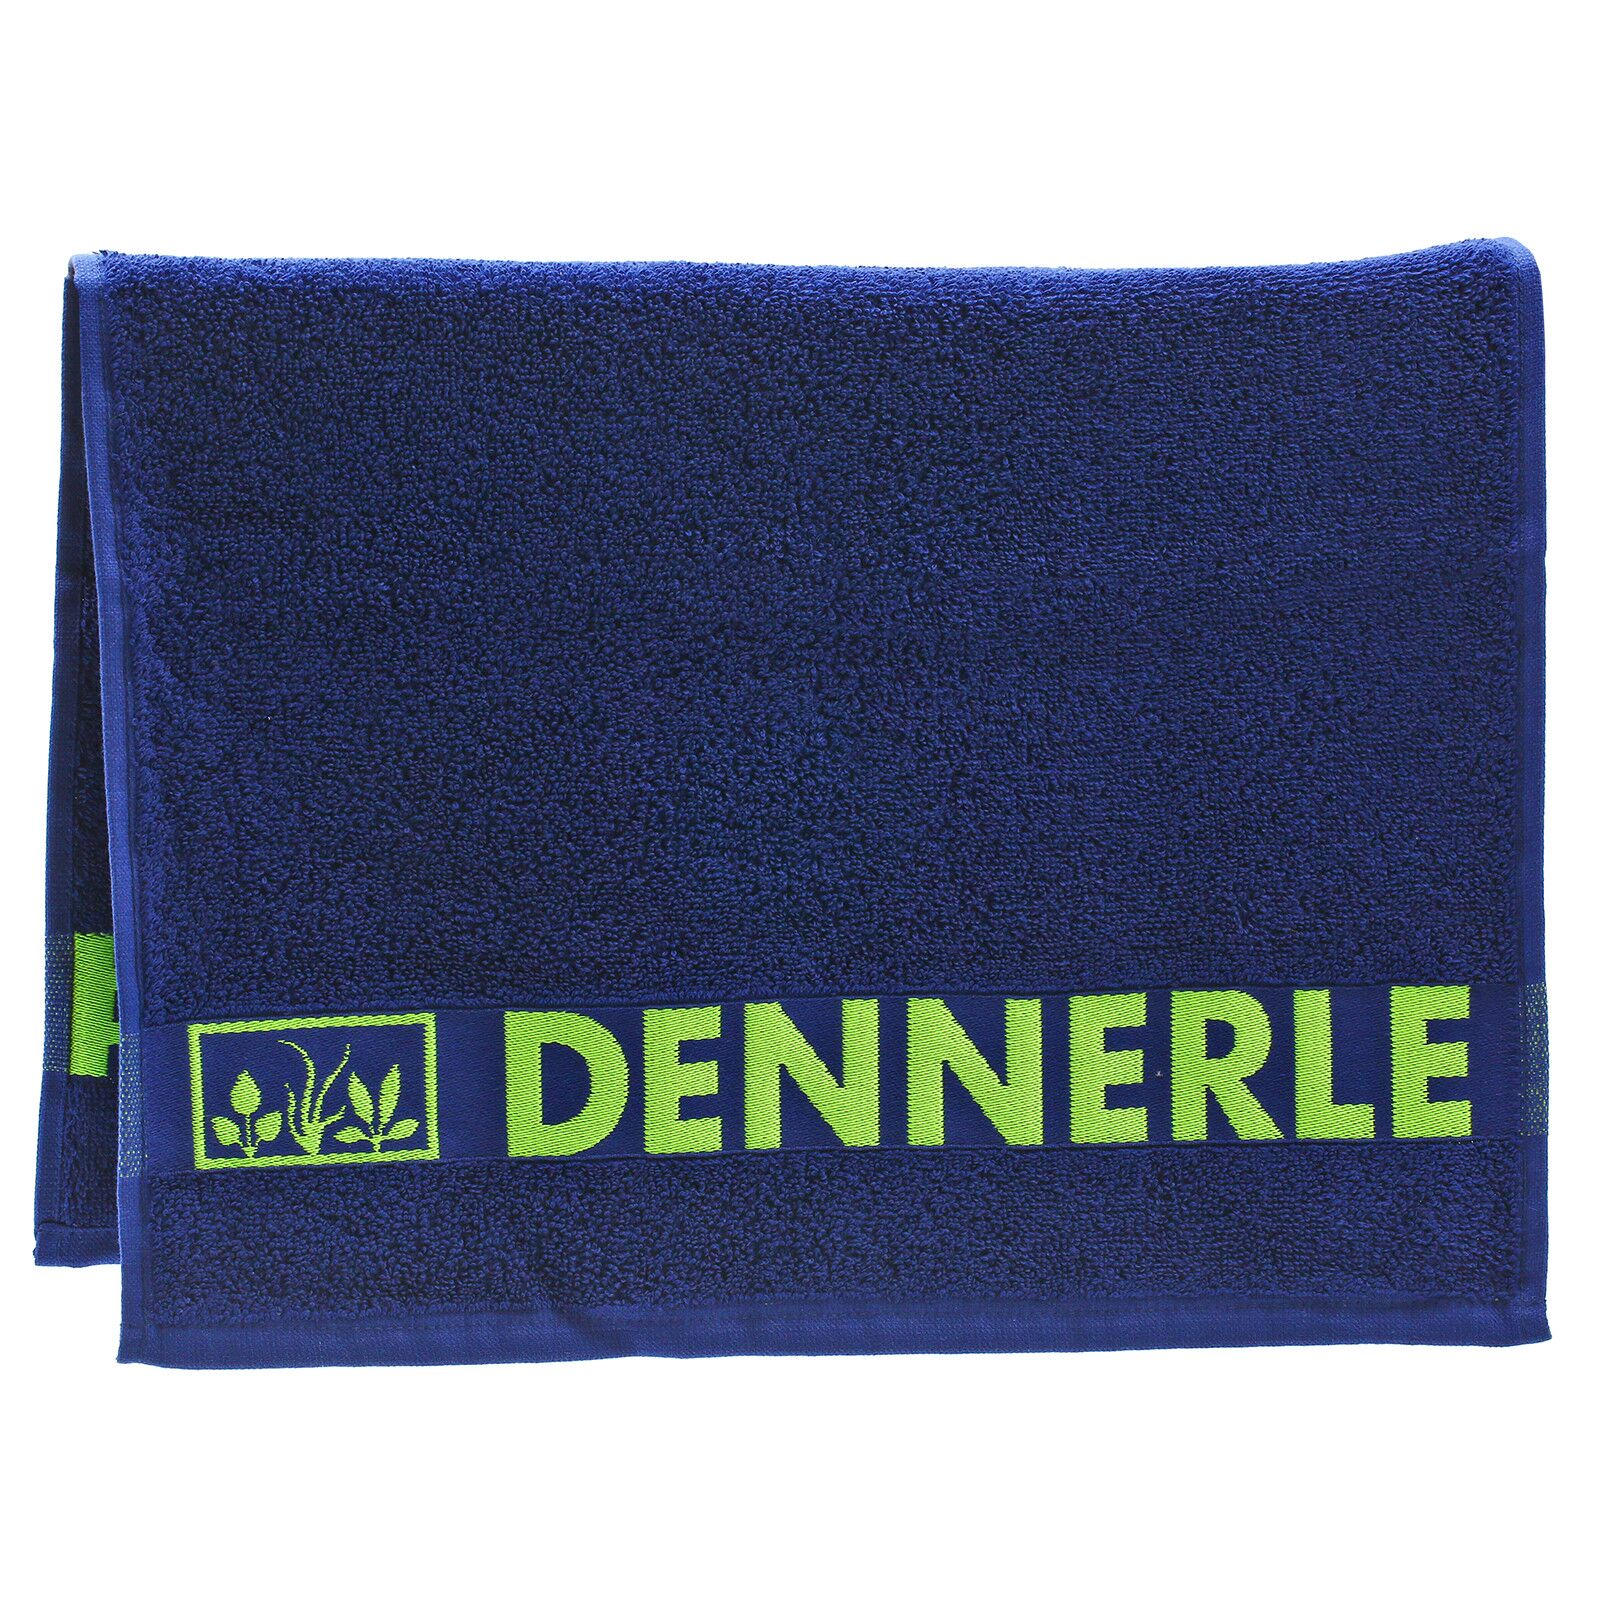 Dennerle - Towel - Cobalt blue